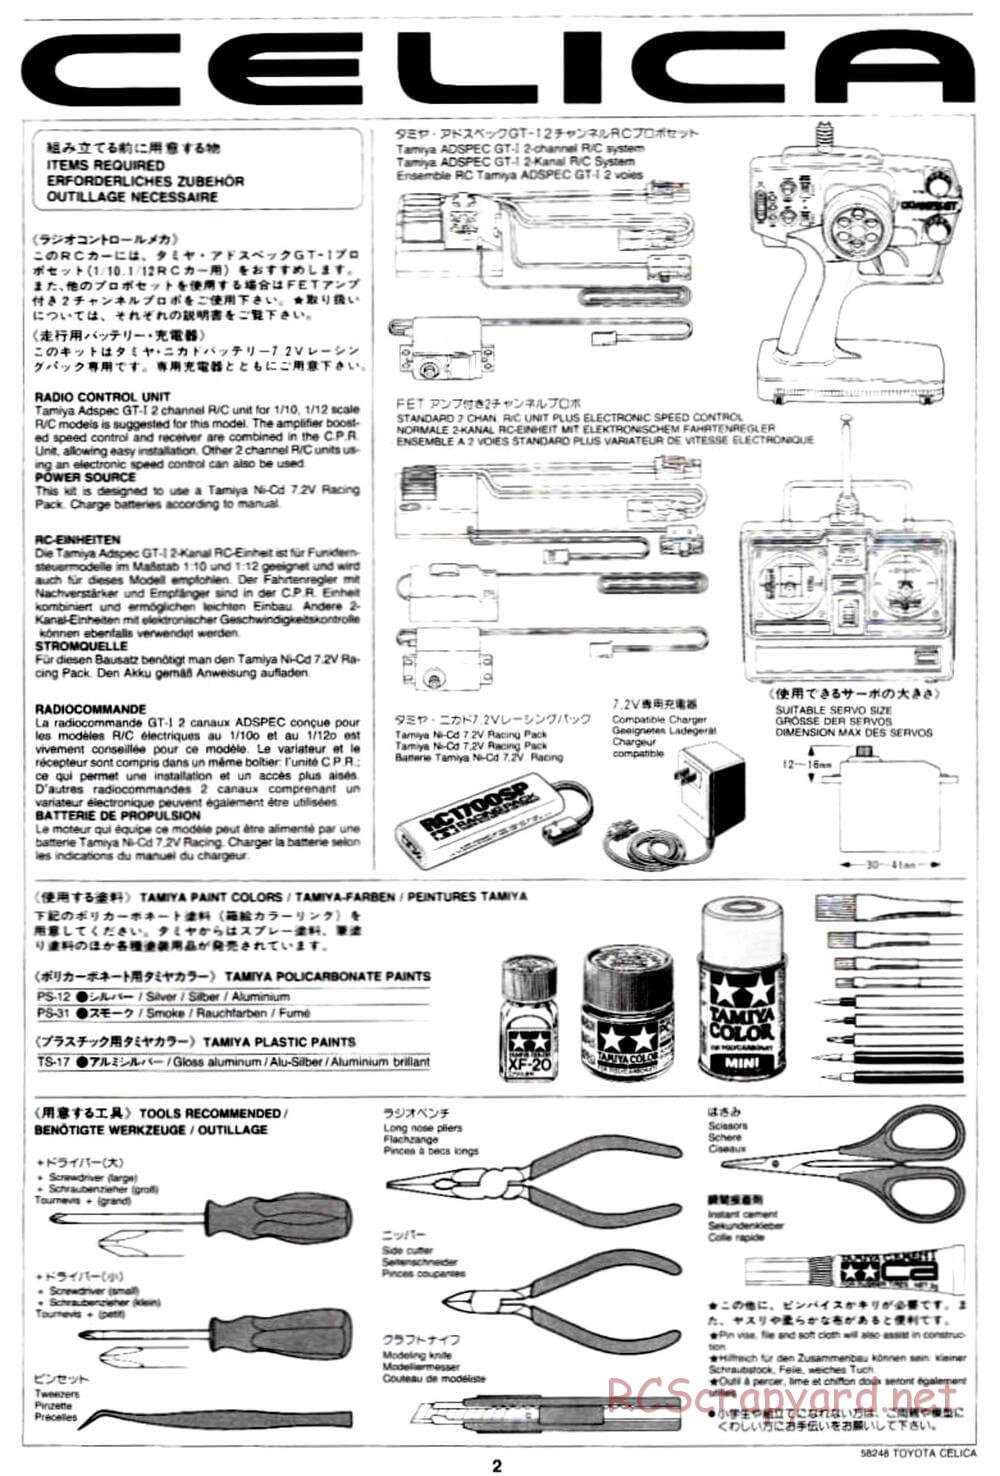 Tamiya - Toyota Celica - FF-02 Chassis - Manual - Page 2